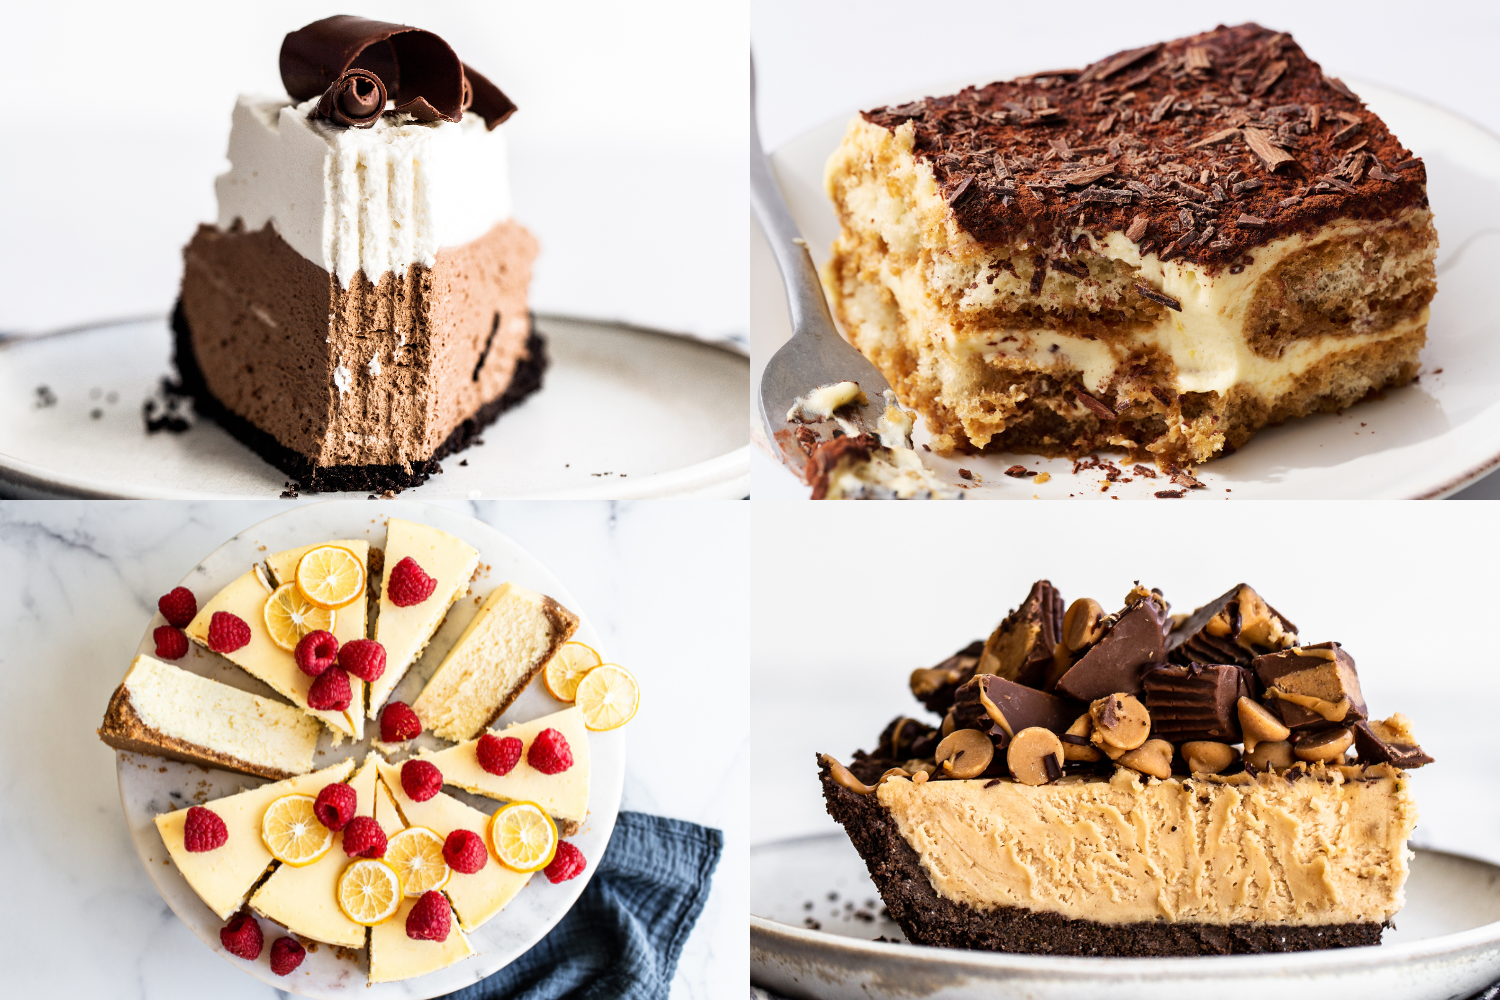 non-cake alternatives for birthday celebrations: French silk pie, Tiramisu, cheesecake, and peanut butter pie.